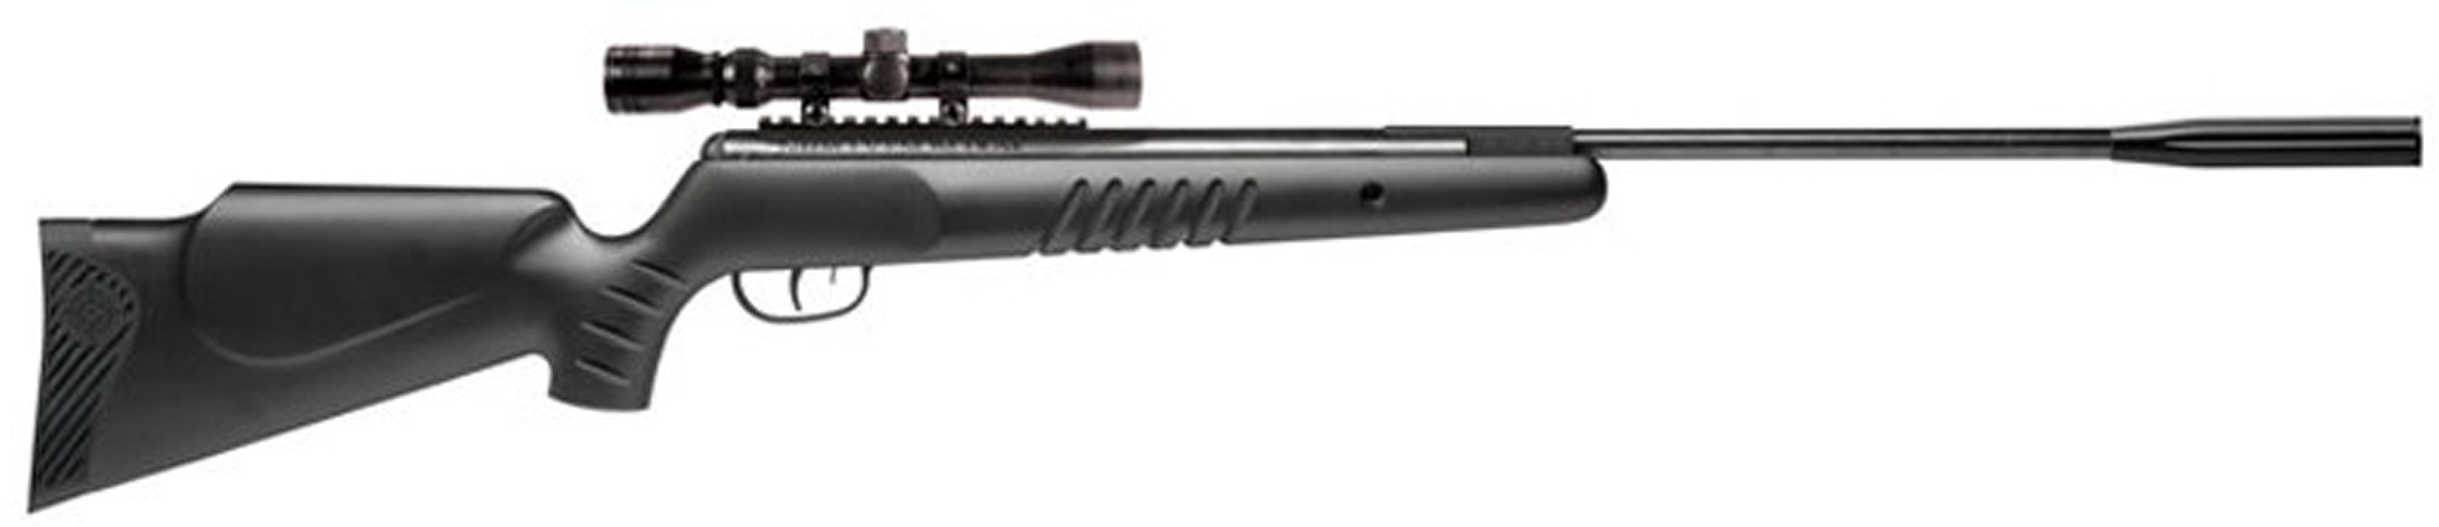 Crosman Nitro Venom Dusk Air Rifle .177 Pellet Break Barrel Black Finish Synthetic Stock Two-Stage Adjustable Trigger wi